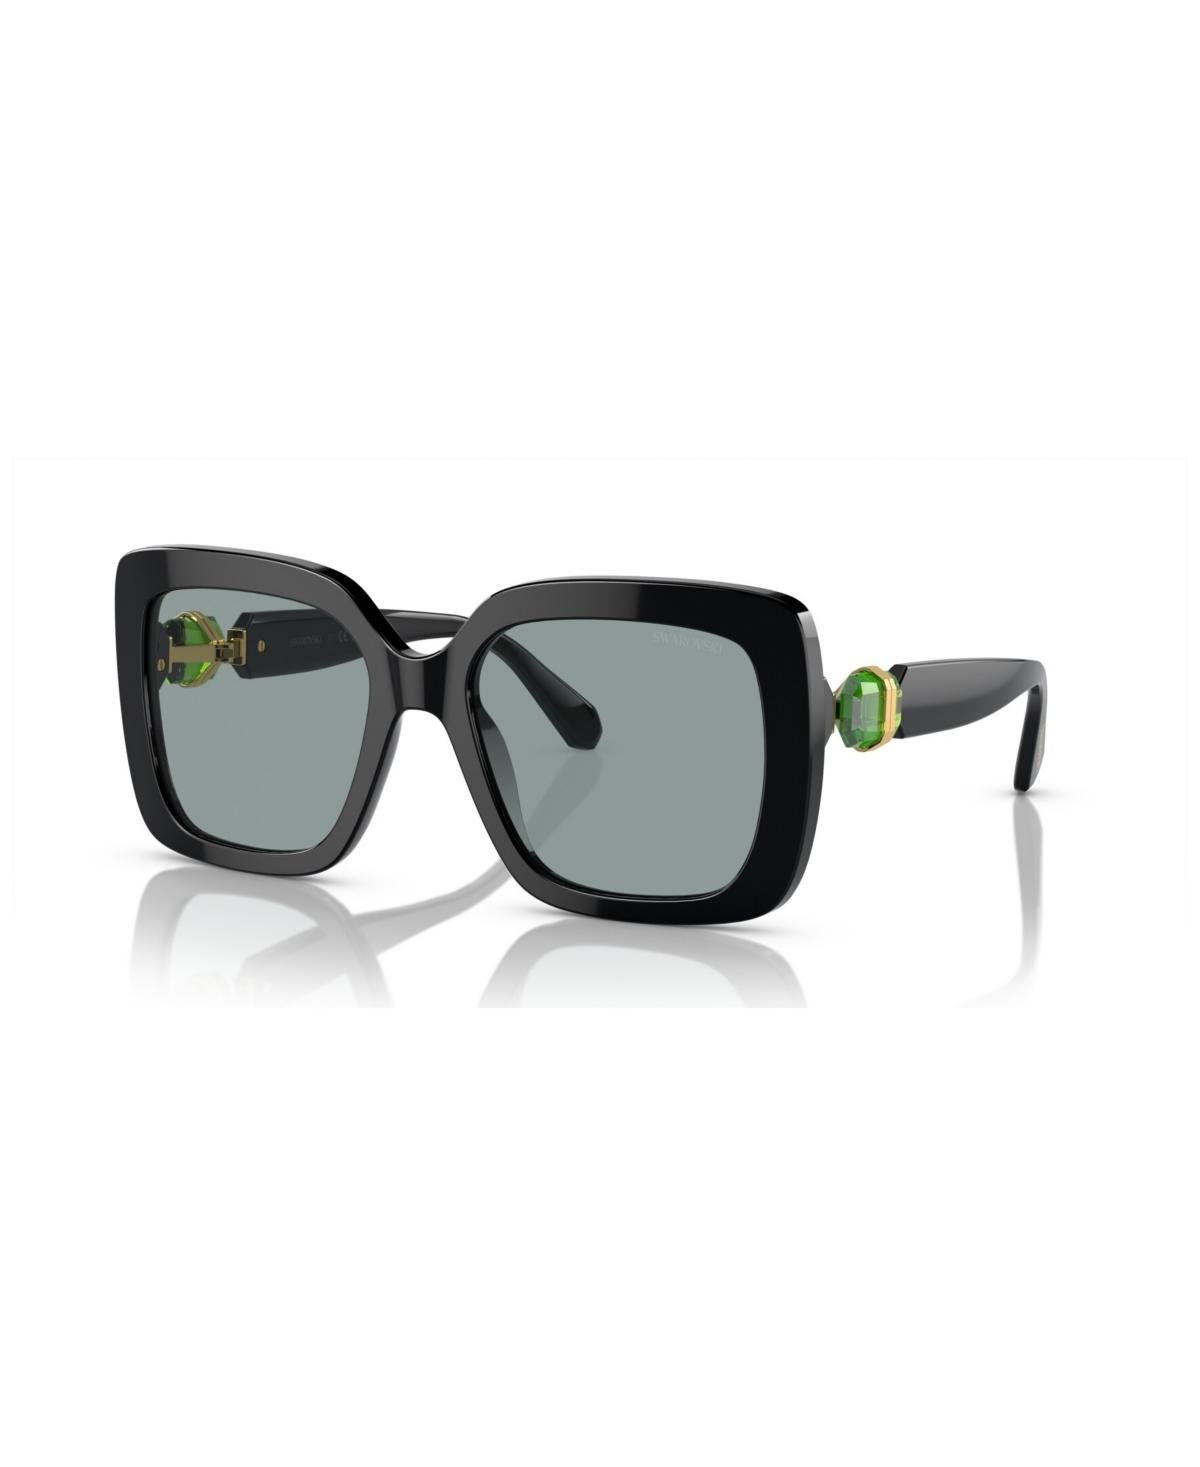 Swarovski 55mm Square Sunglasses Product Image